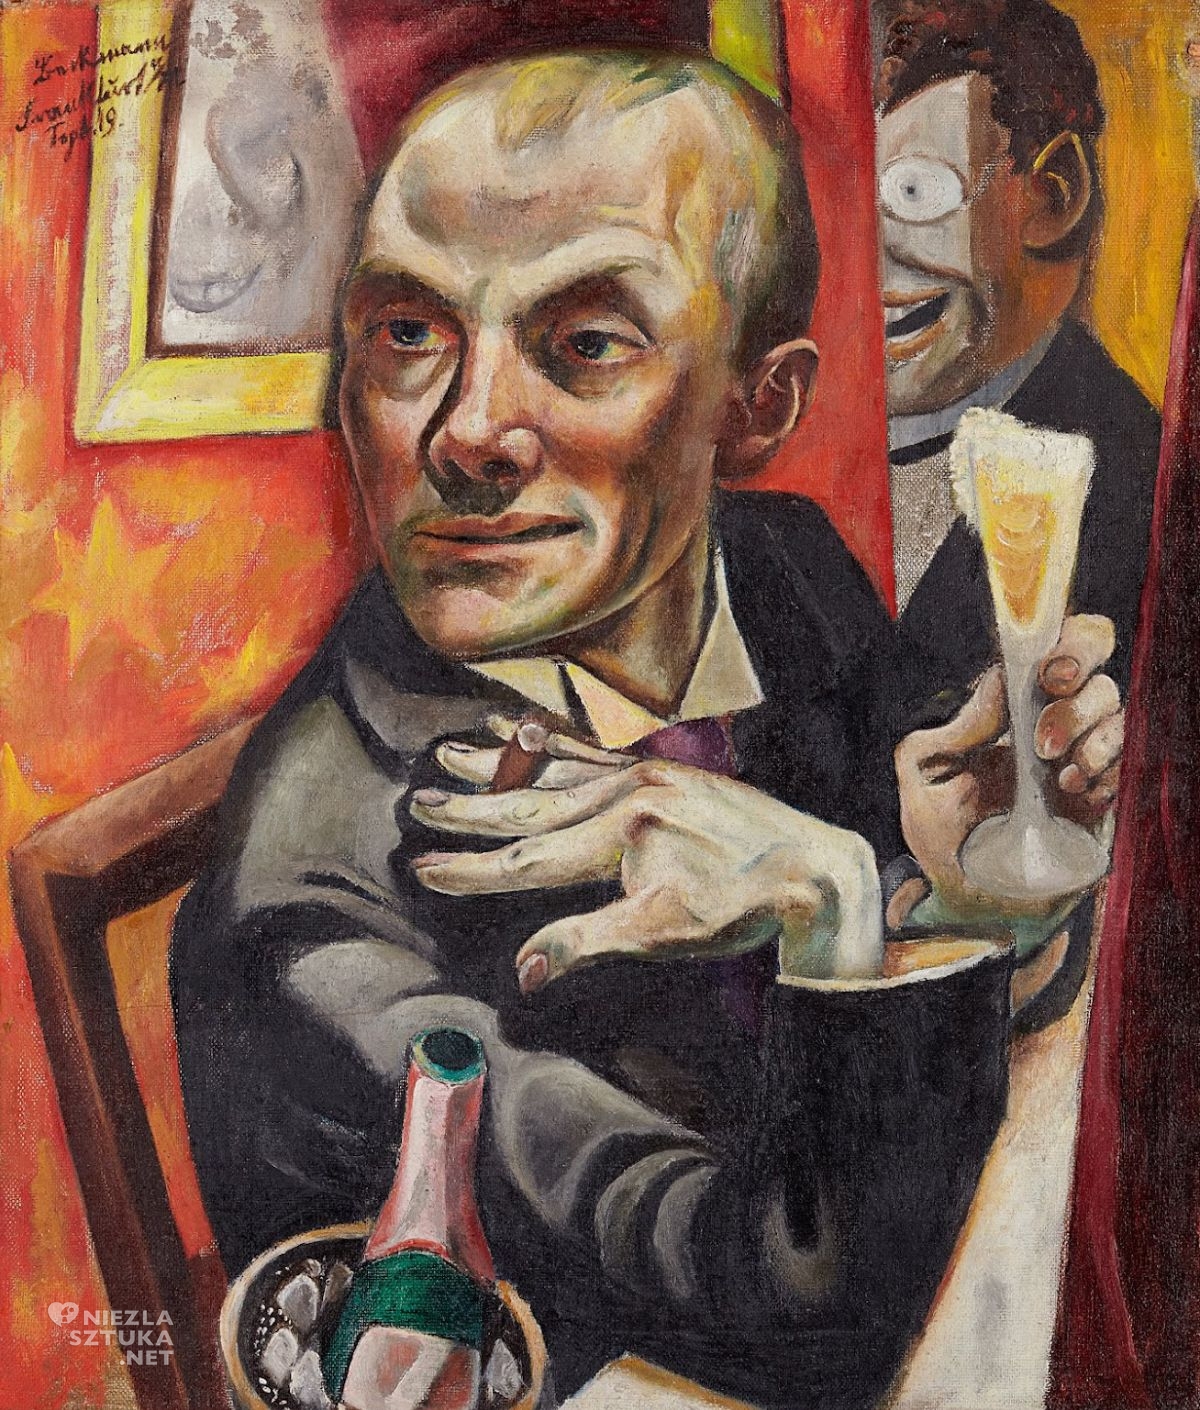 Max Beckmann, Autoportret z kieliszkiem szampana, sztuka niemiecka, Niezła Sztuka